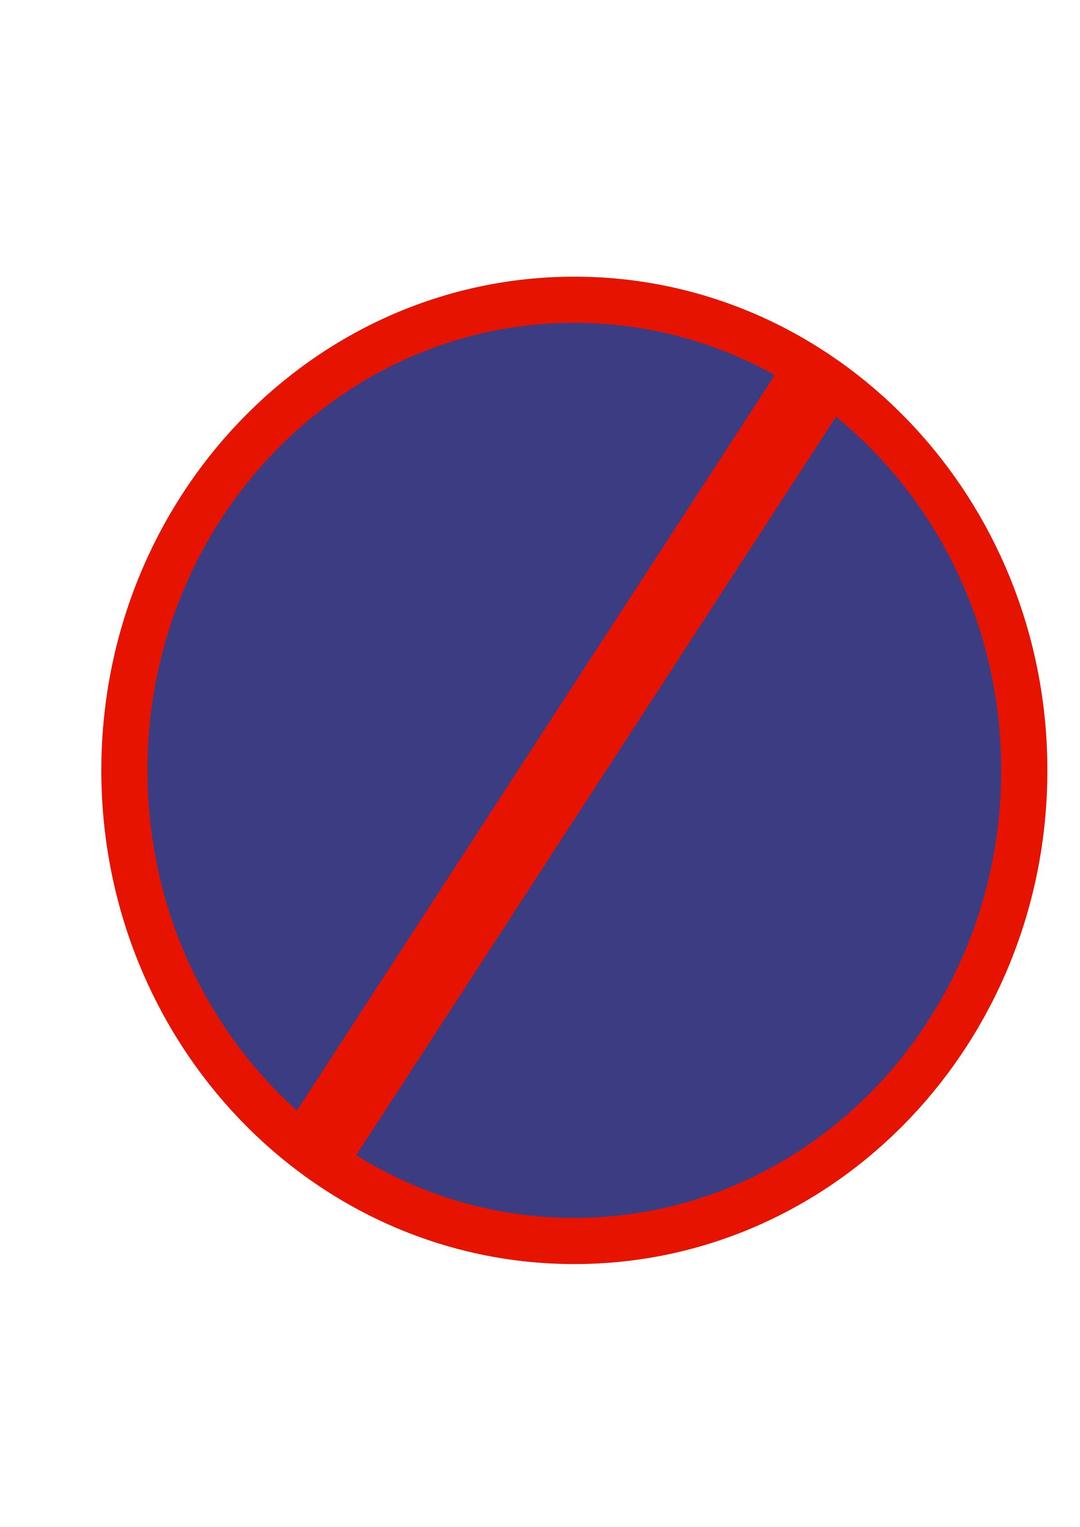 Indian road sign - No parking png transparent